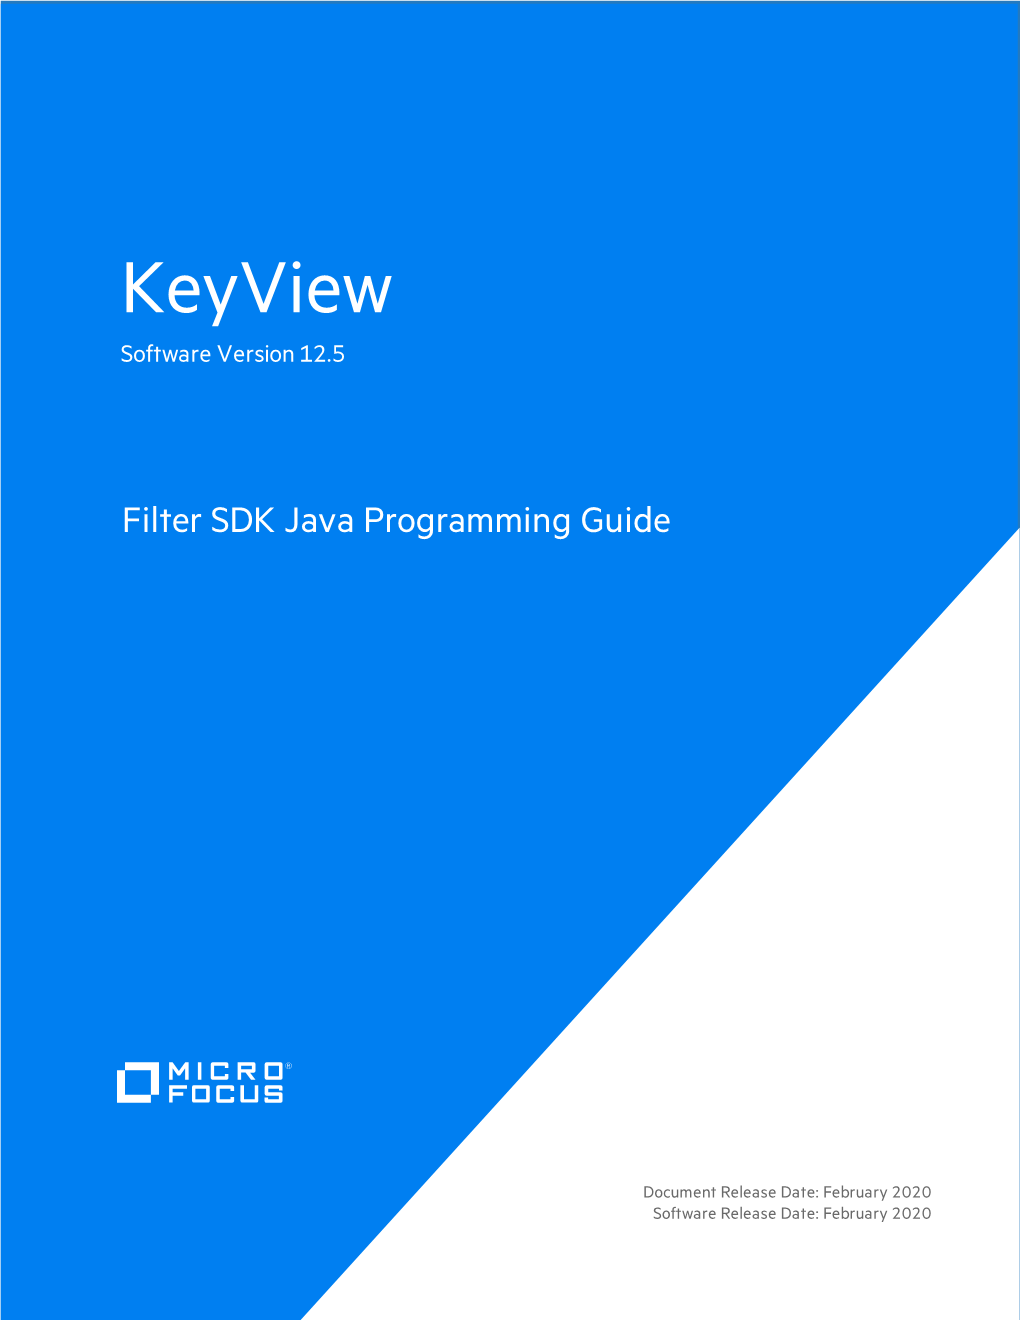 IDOL Keyview Filter SDK 12.5 Java Programming Guide